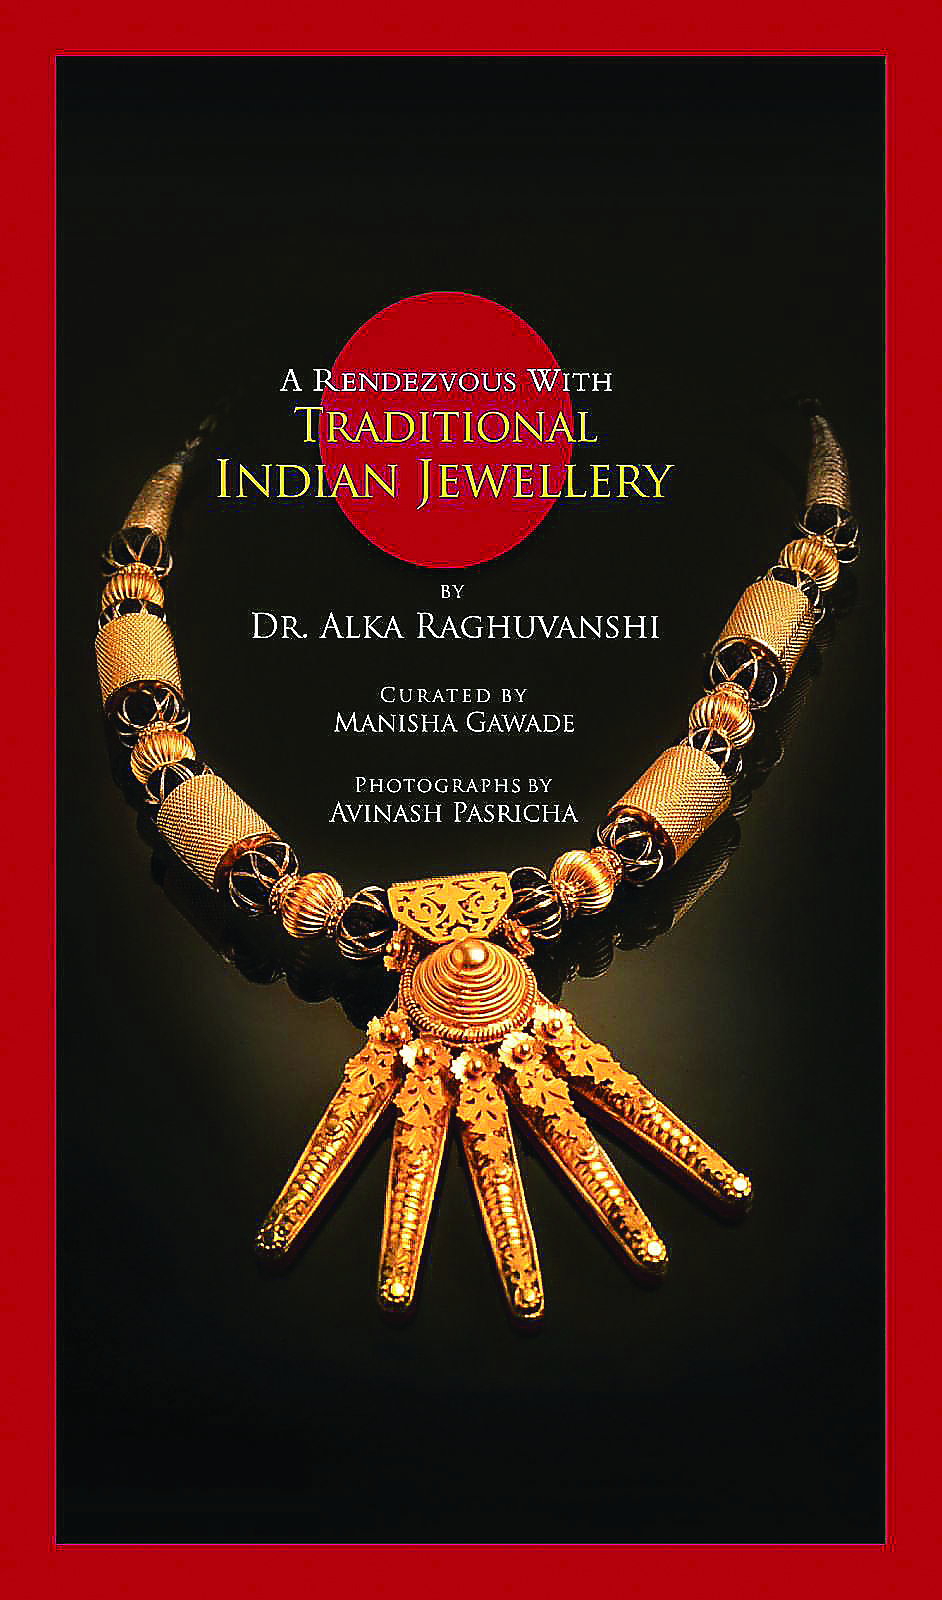 Celebrating Indian traditional jewellery through heritage & craftsmanship